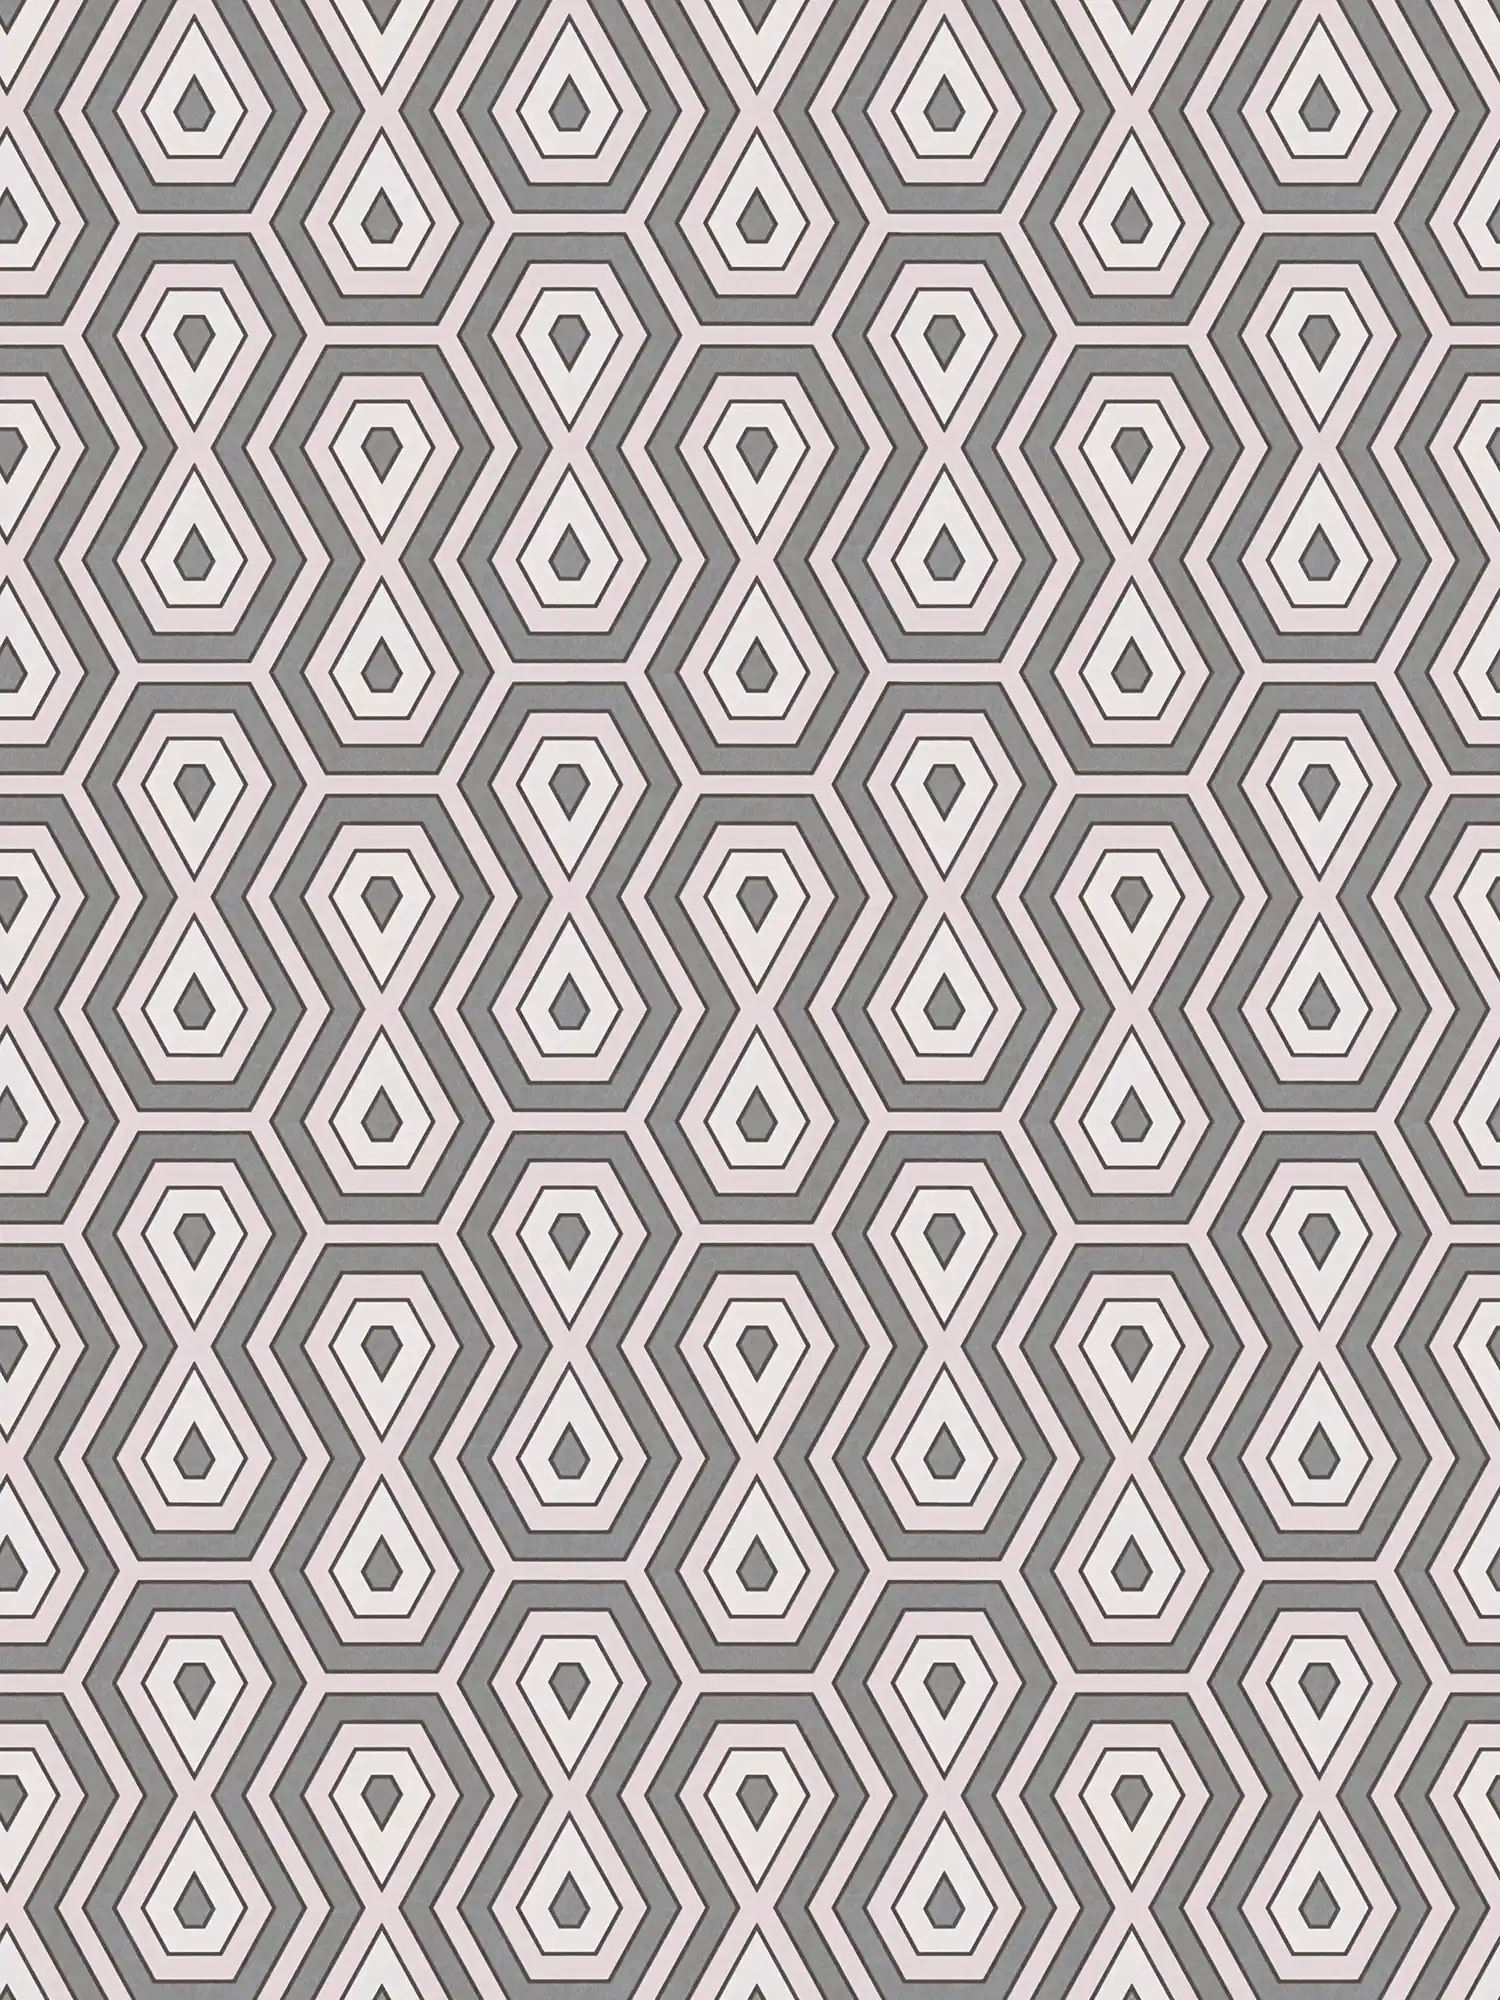 Tapete Metallic Retro Muster mit 70er Grafik Design – Rosa, Grau, Weiß
